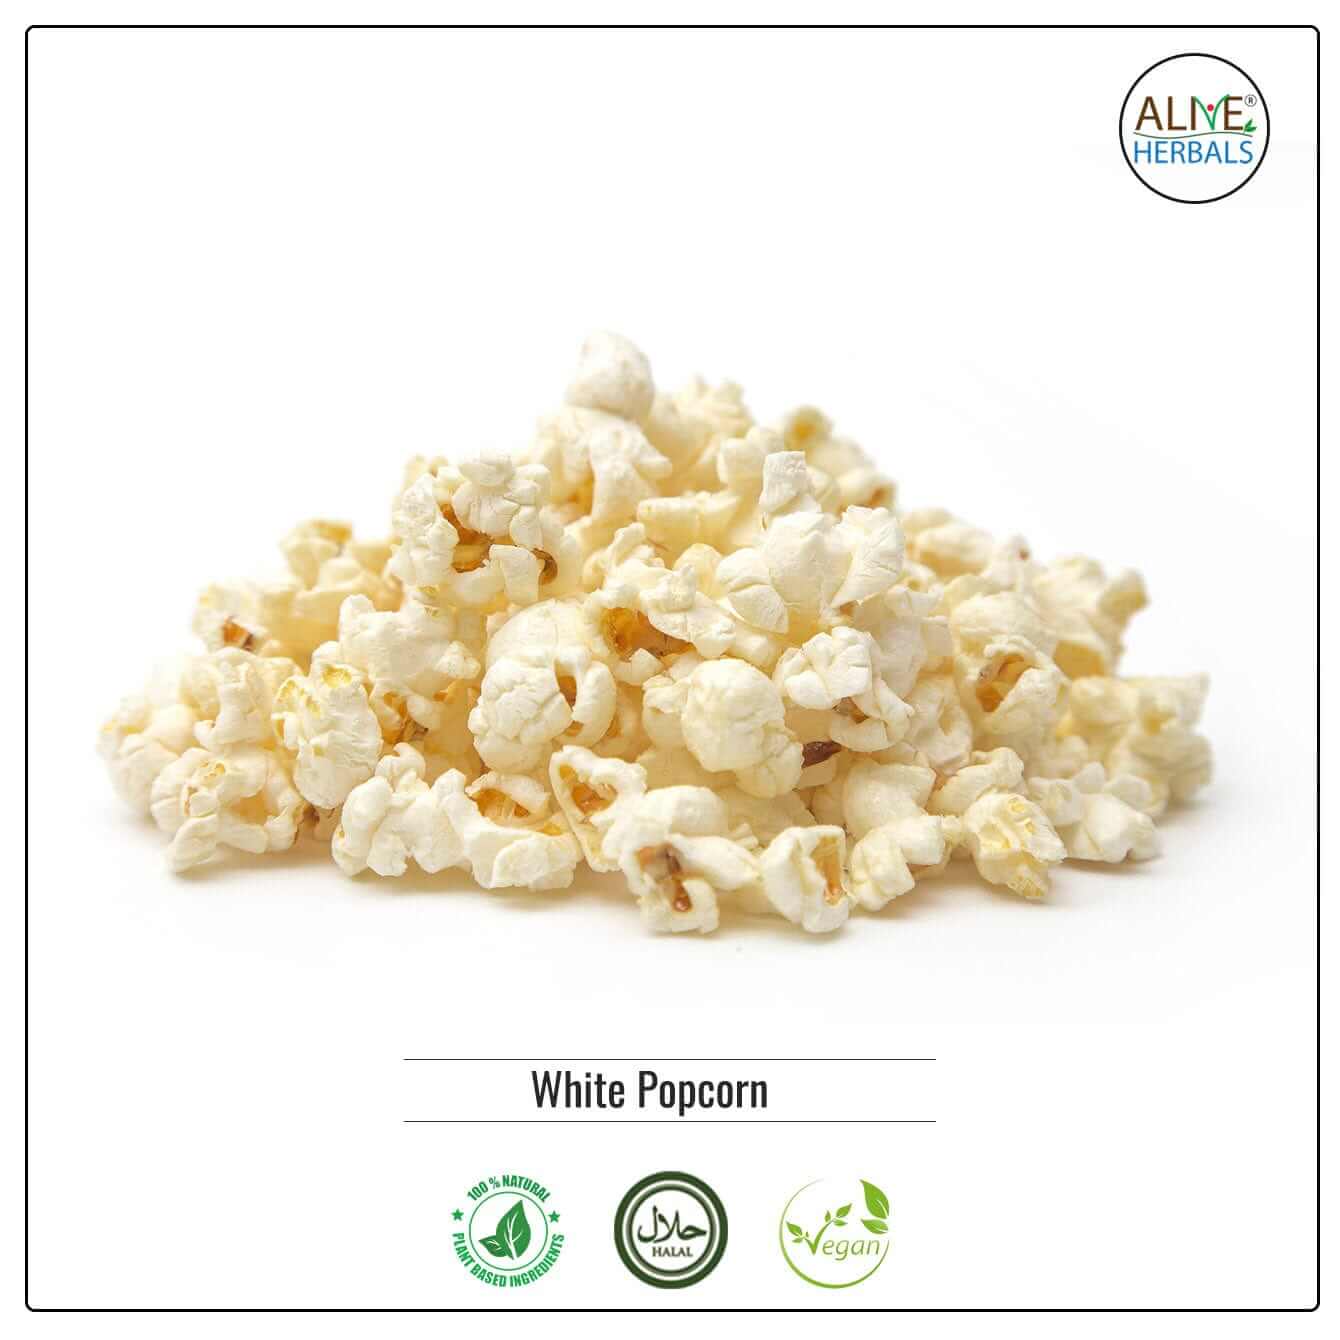 White Popcorn - Shop at Natural Food Store | Alive Herbals.